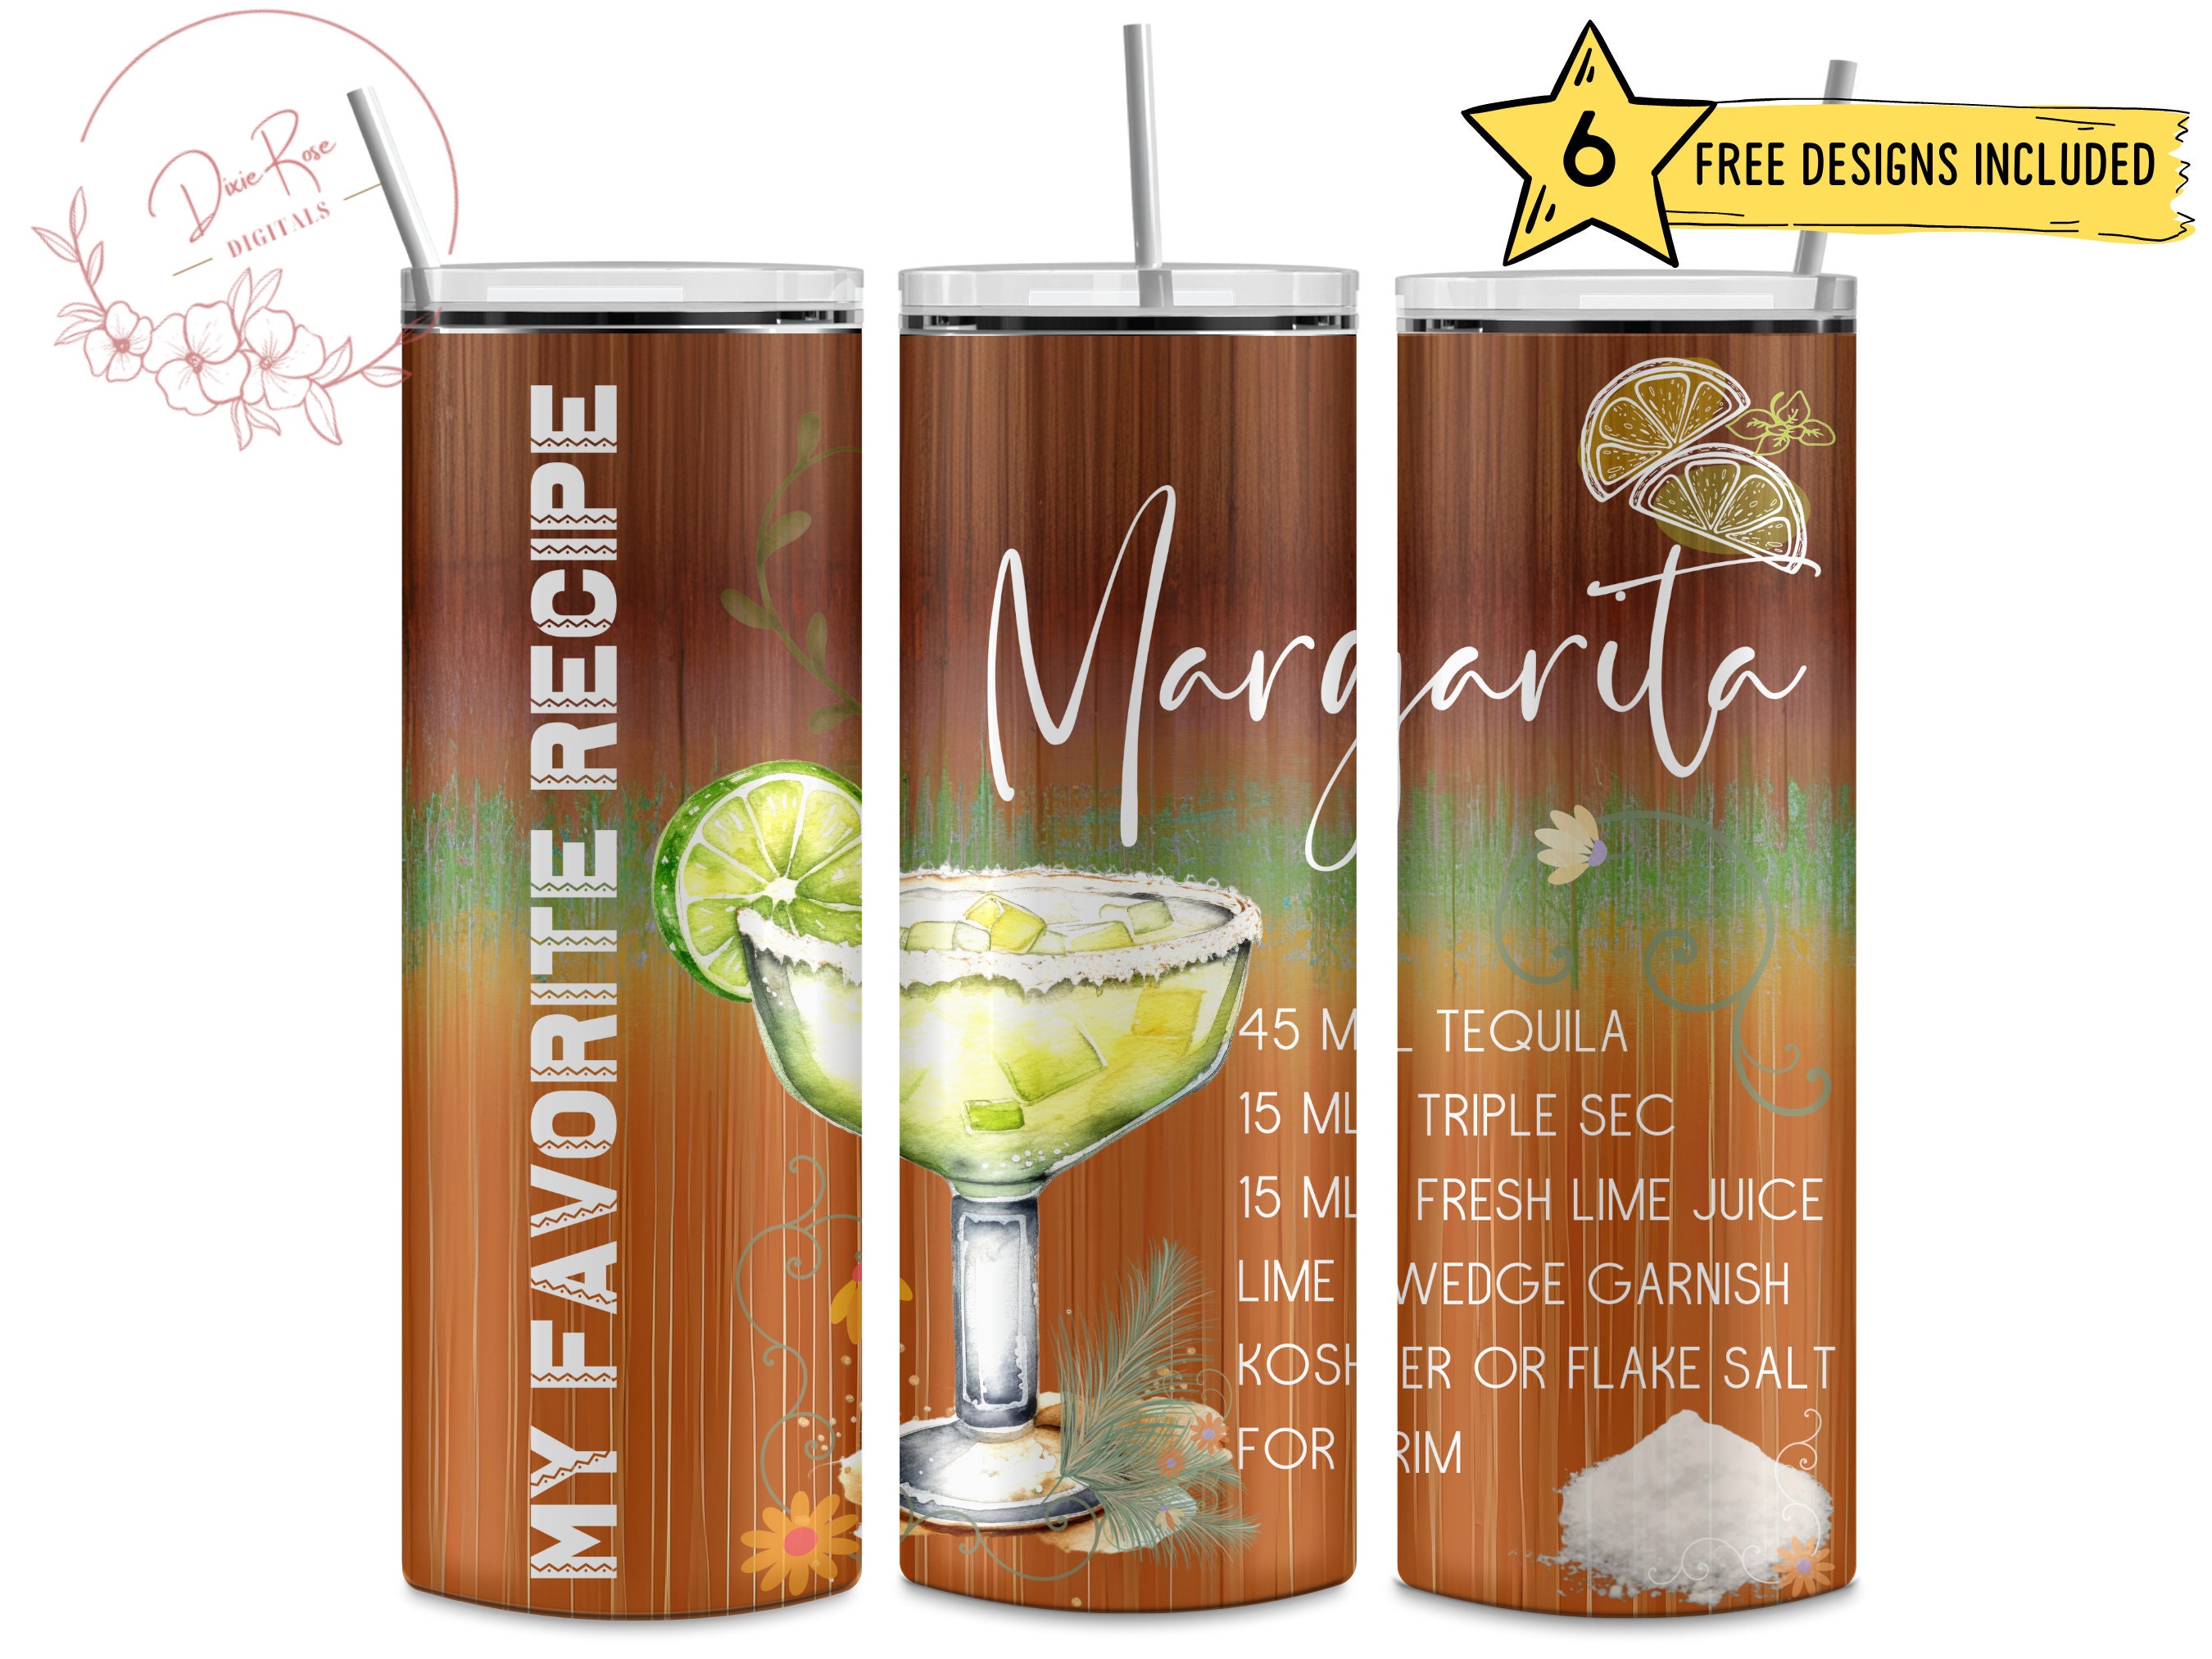 Craftmix Cocktail Mix Mango Margarita Flavor, Skinny Natural Low